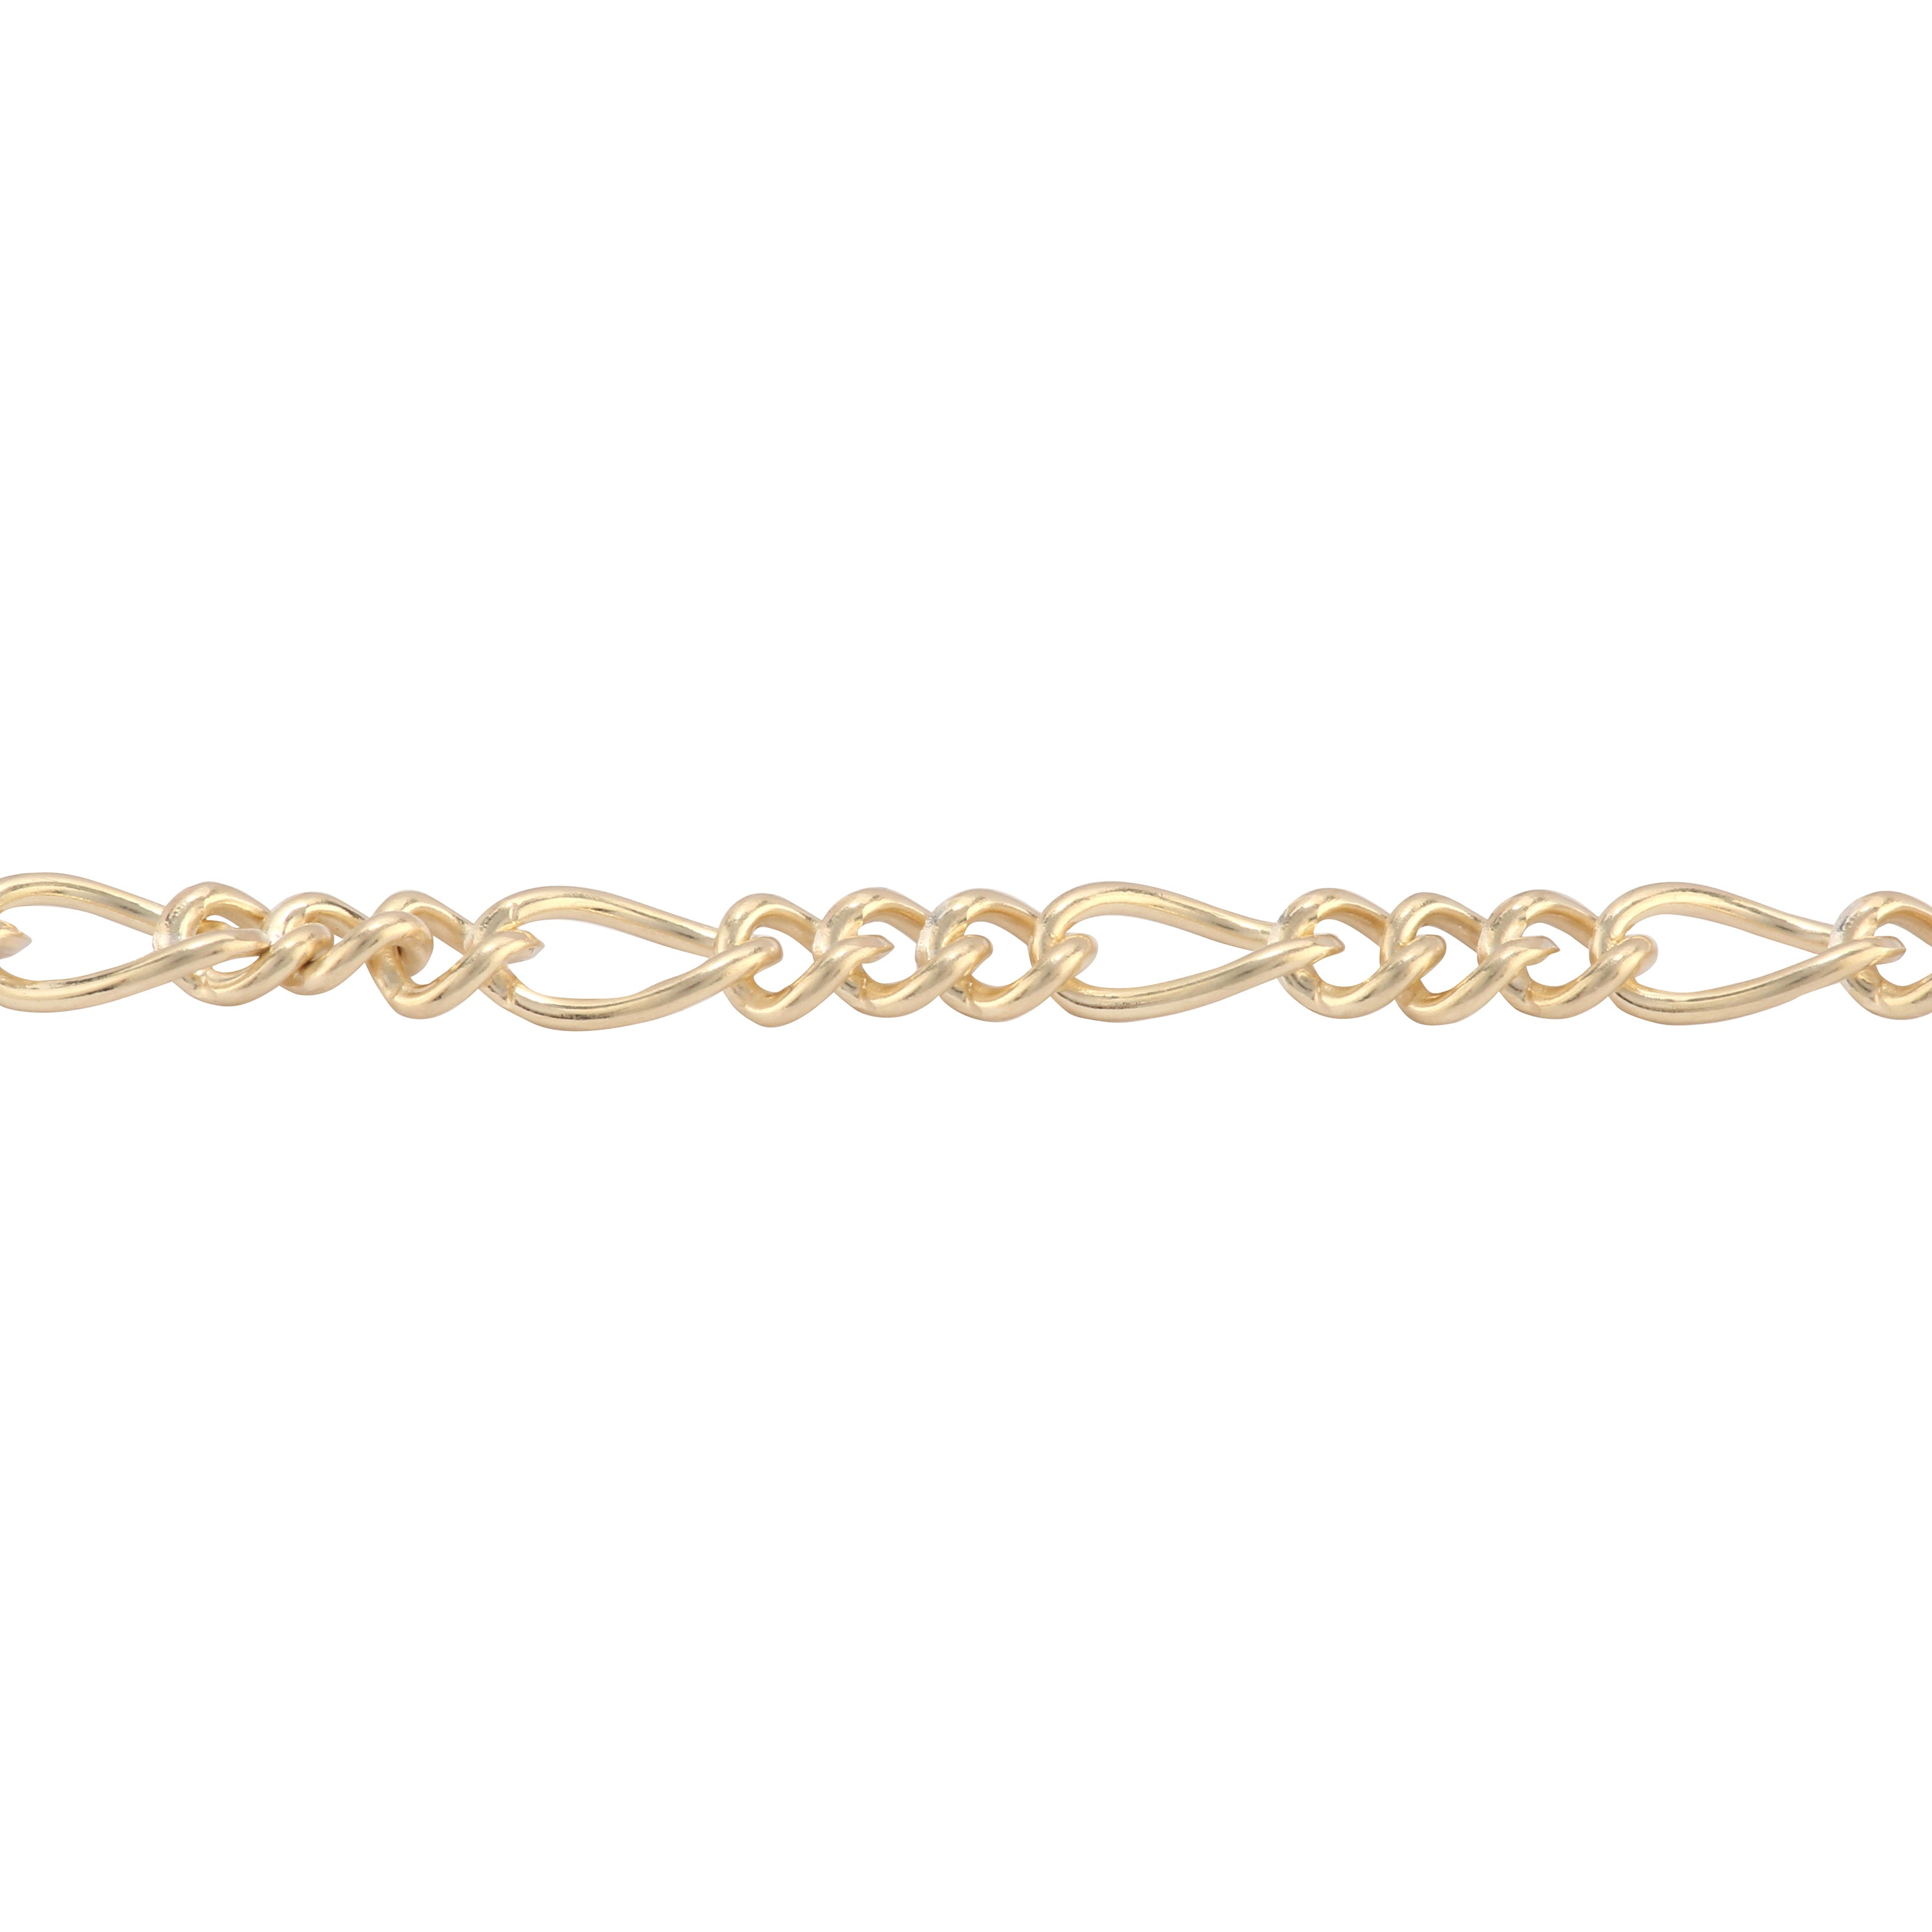 DIY Chain Bracelets: No Solder Paperclip Chain!